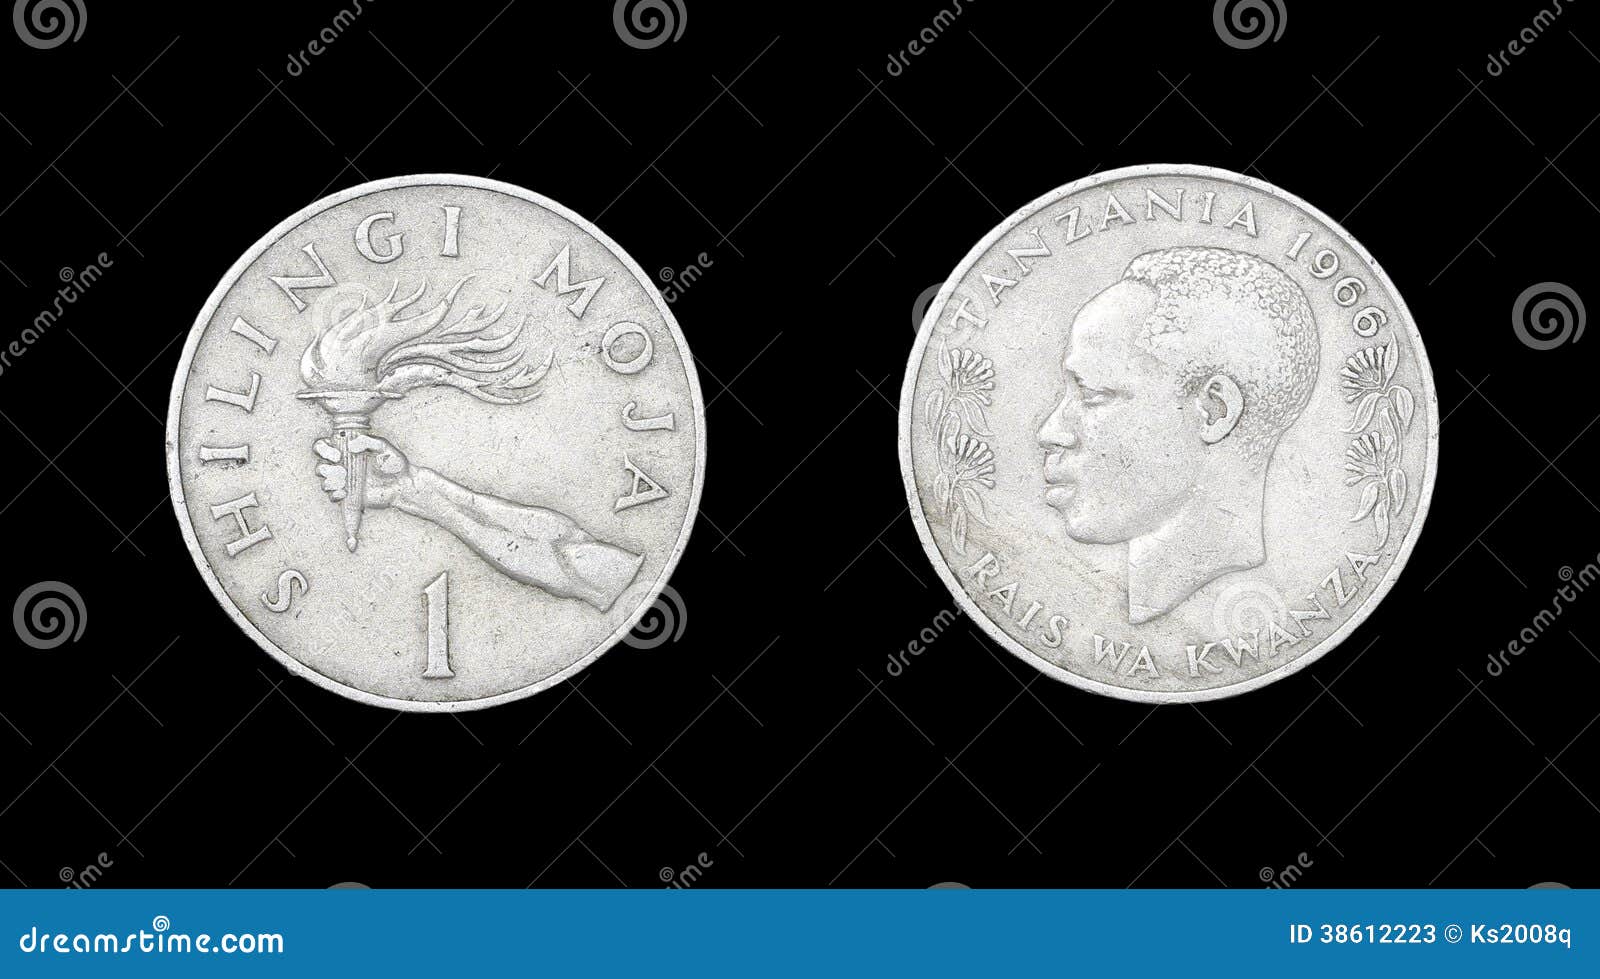 Coin of Tanzania. XX Century Stock Image - Image of republic, africa:  38612223